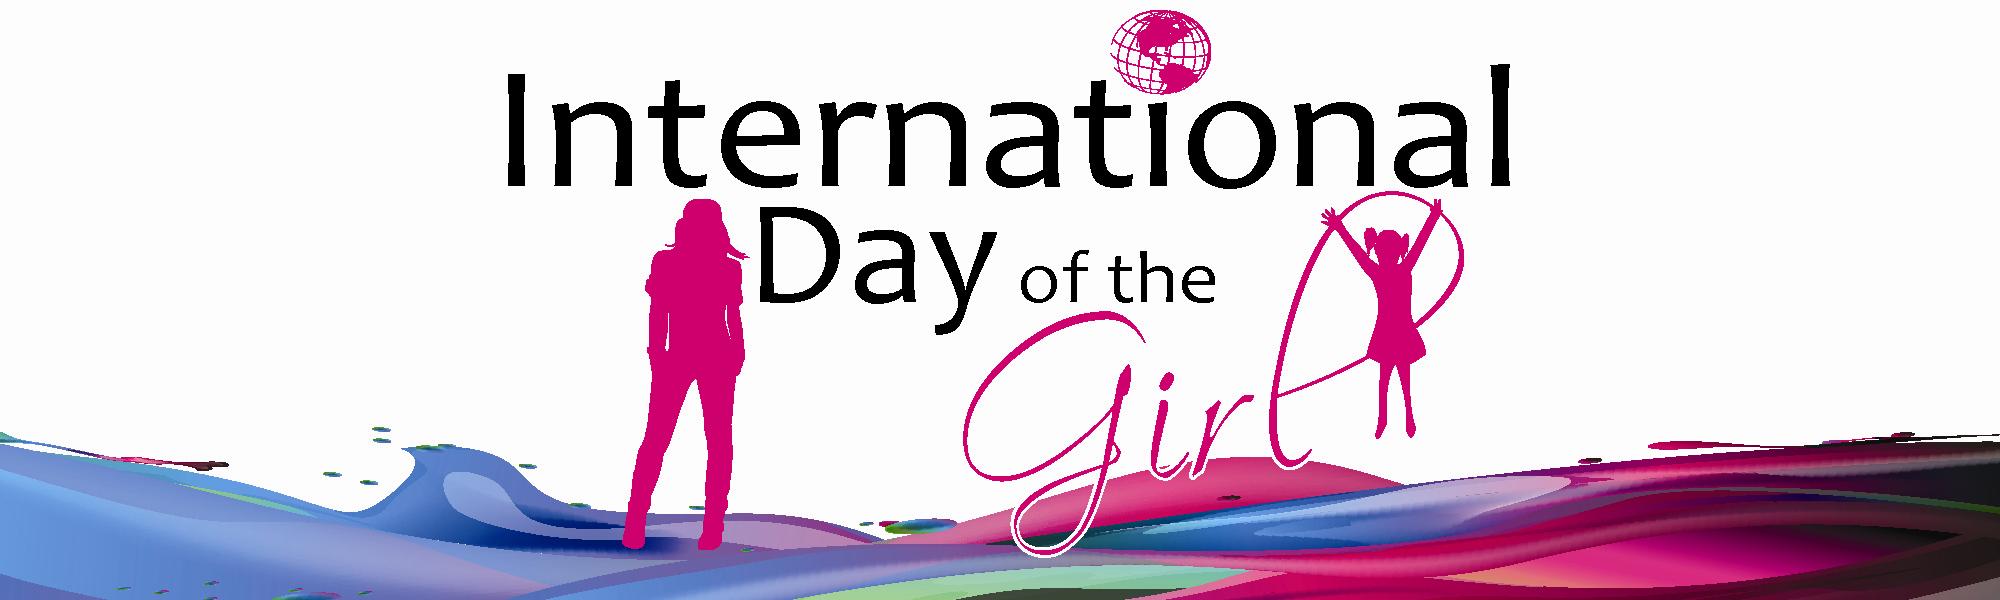 International Day of the Girl banner